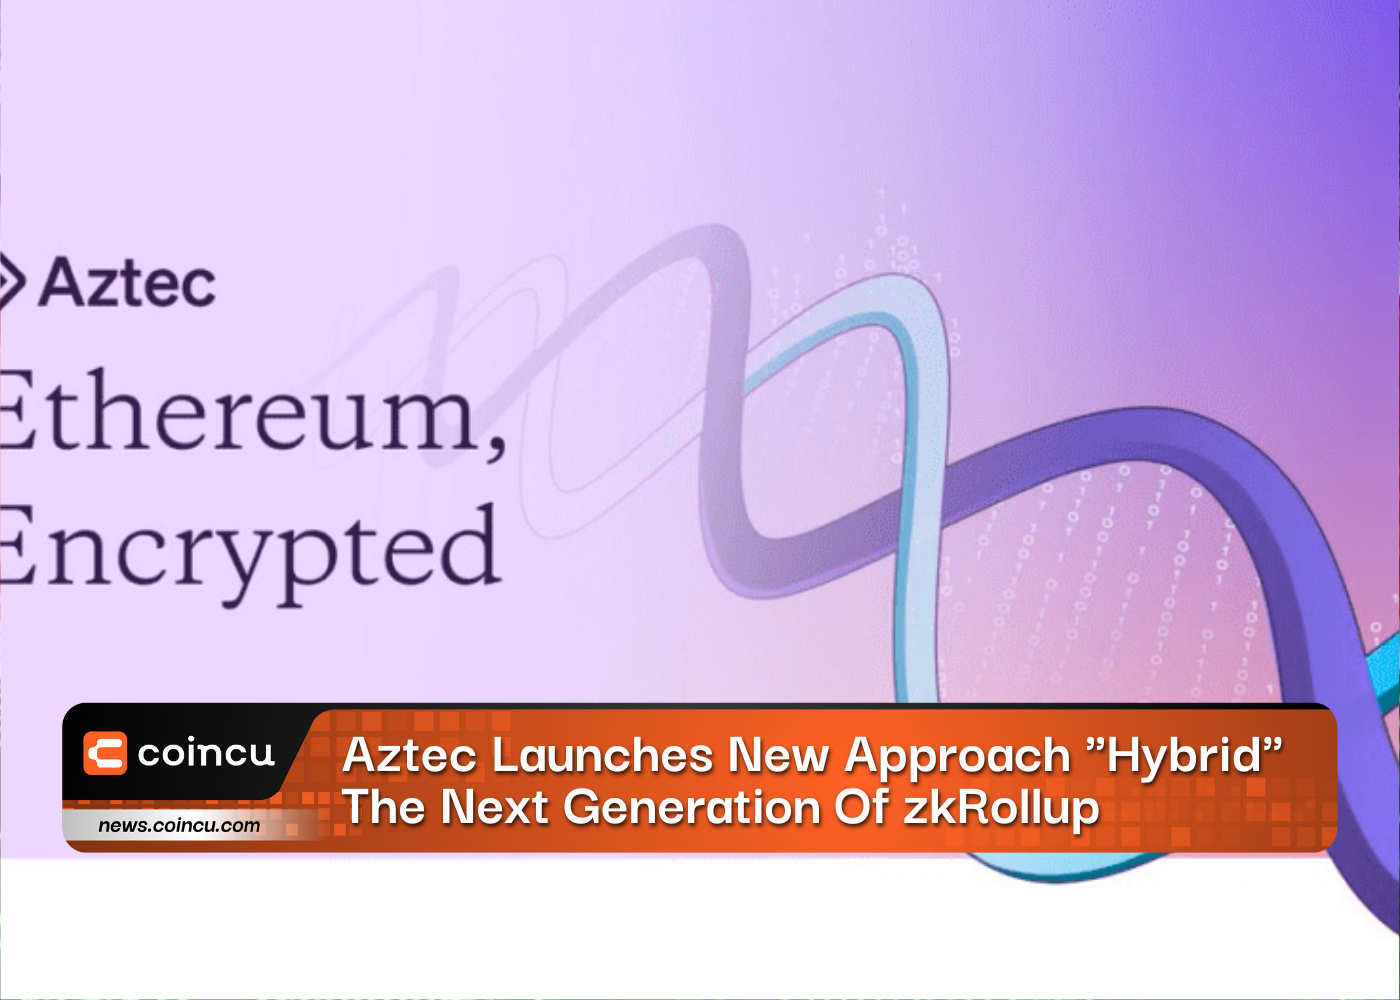 Aztec 推出新方法“Hybrid”，下一代 zkRollup